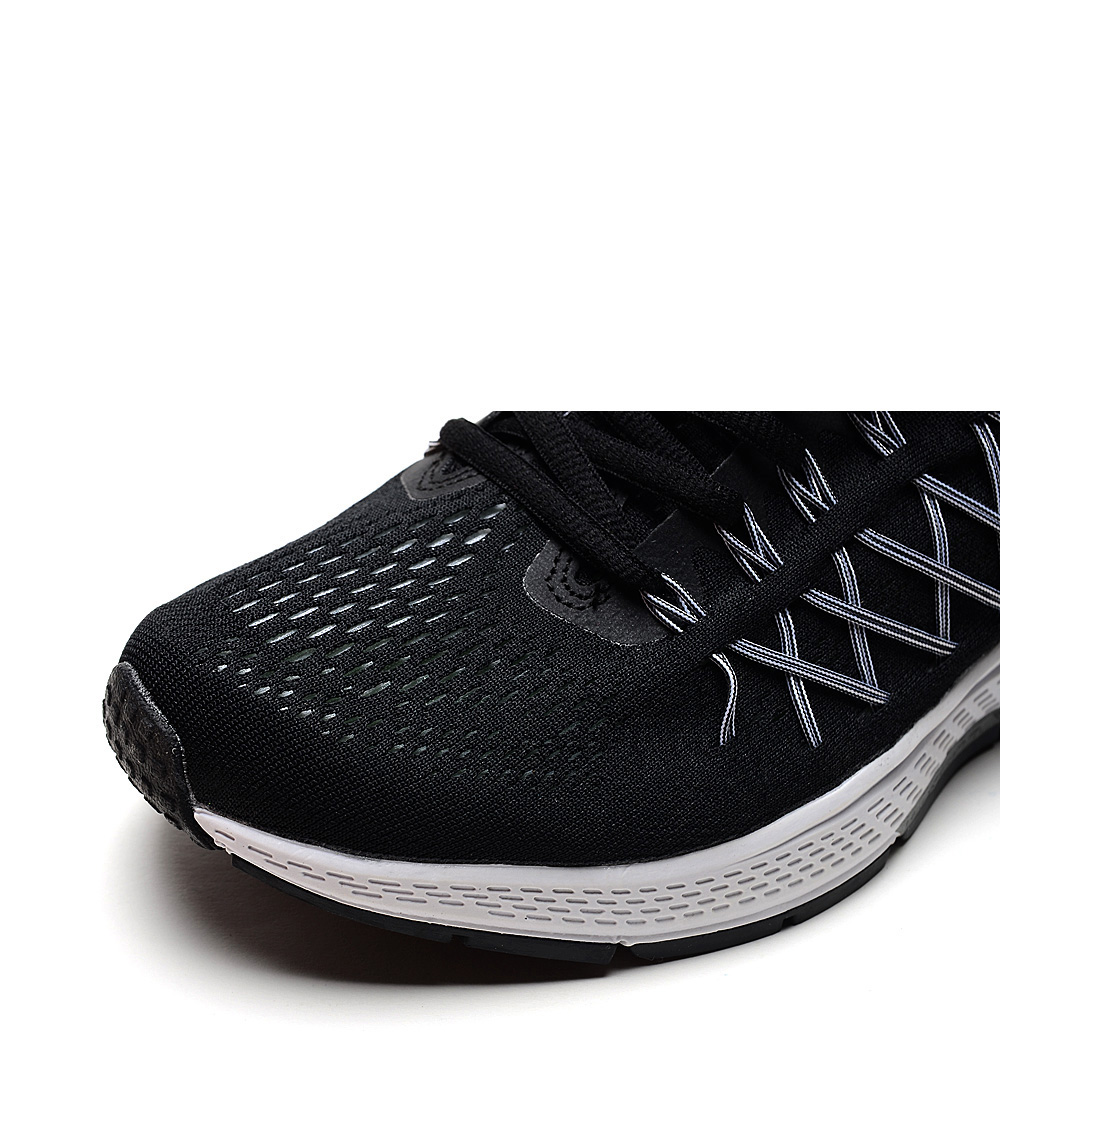 [HKAU]运动风简约织物运动鞋(偏小半码)
编号:A3535K1A77